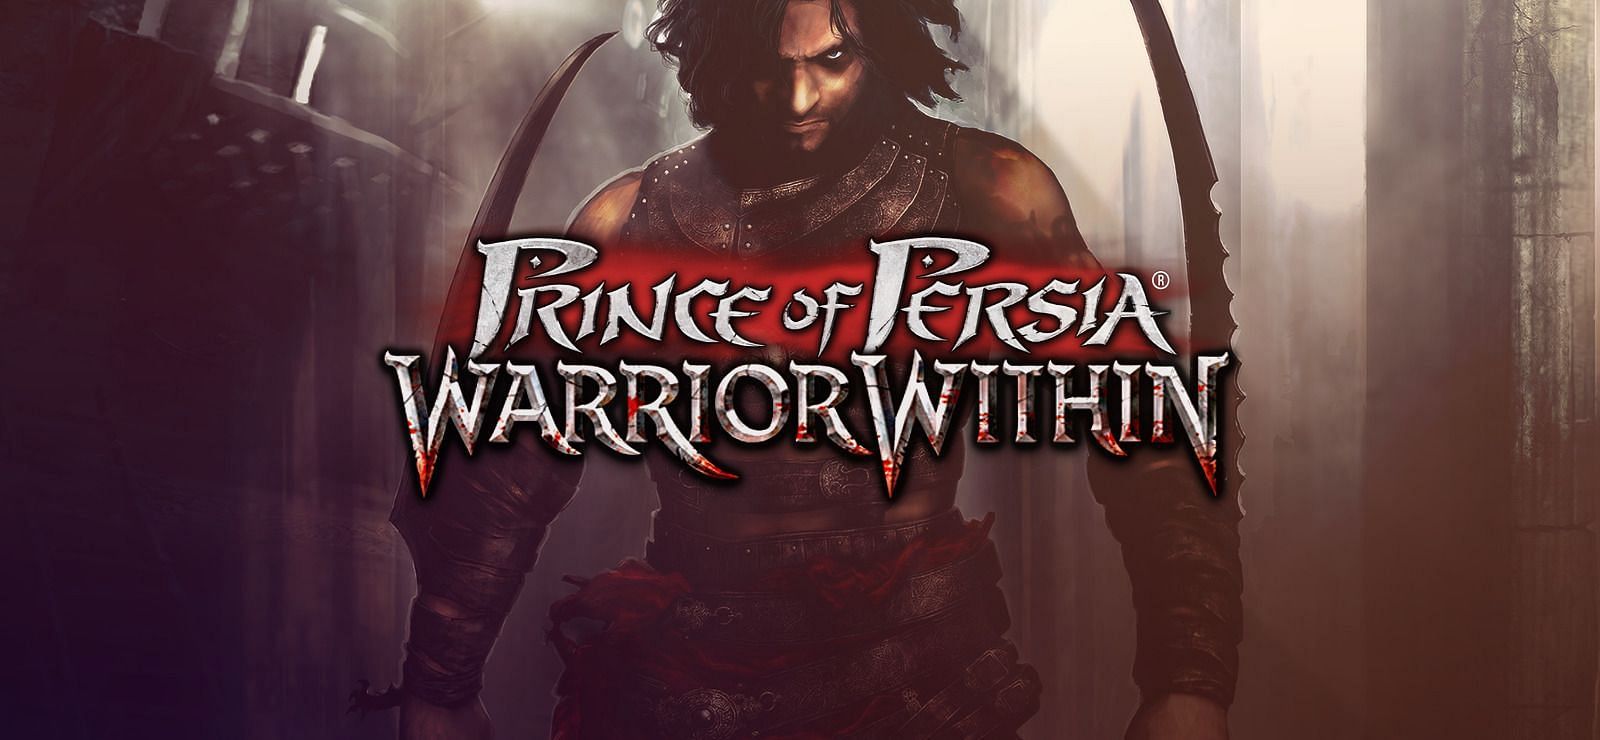 Prince of Persia: Warrior Within (Image via GOG.com)